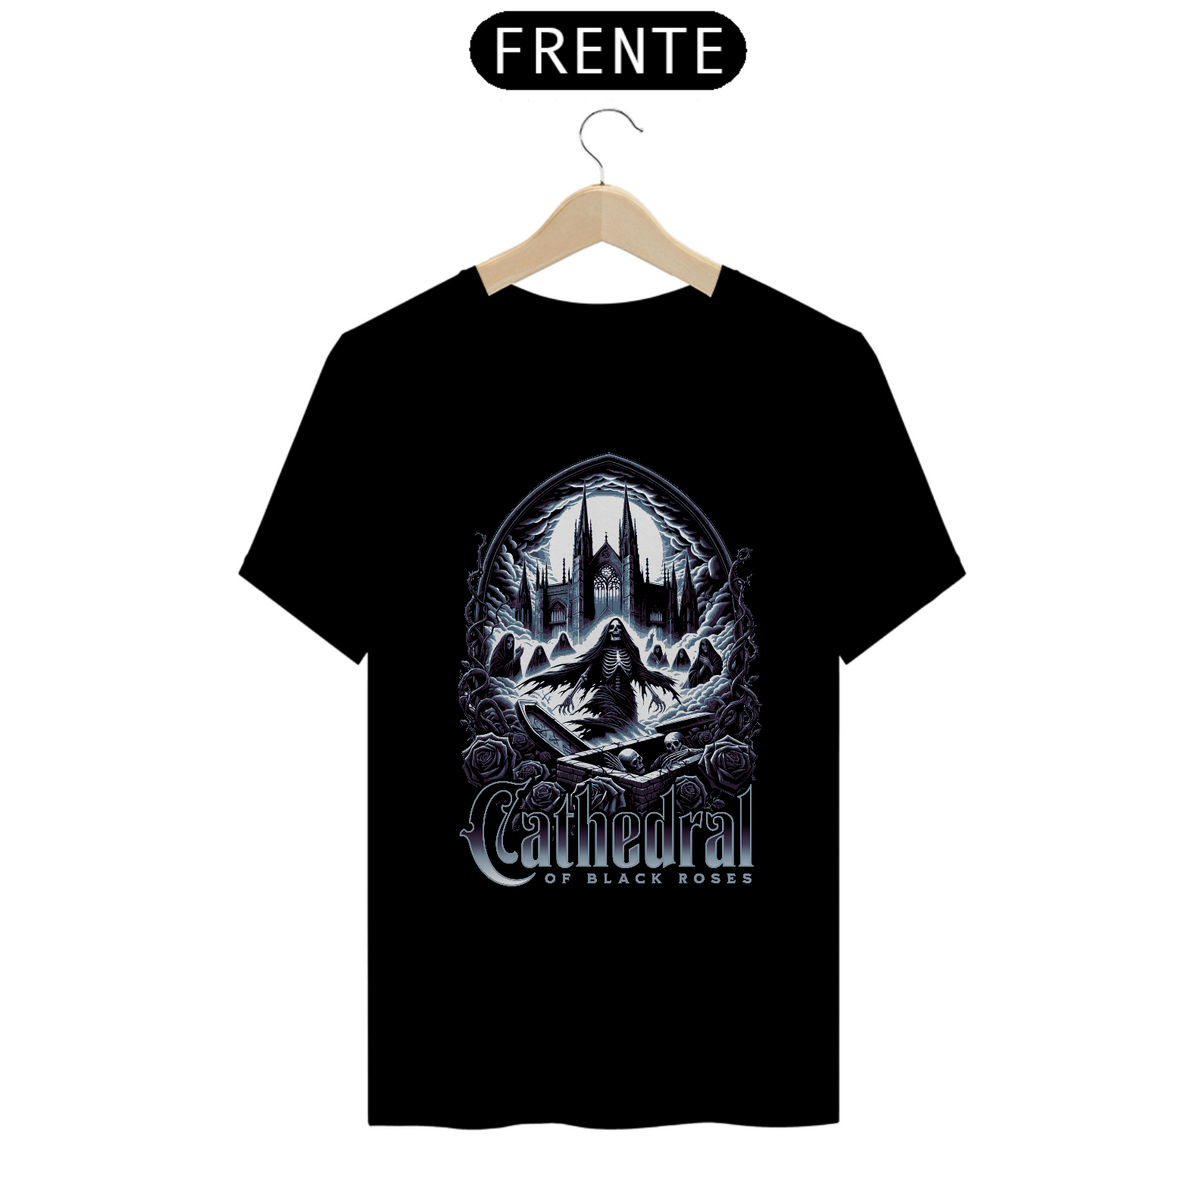 Nome do produto: Camiseta Cathedral of Black Roses